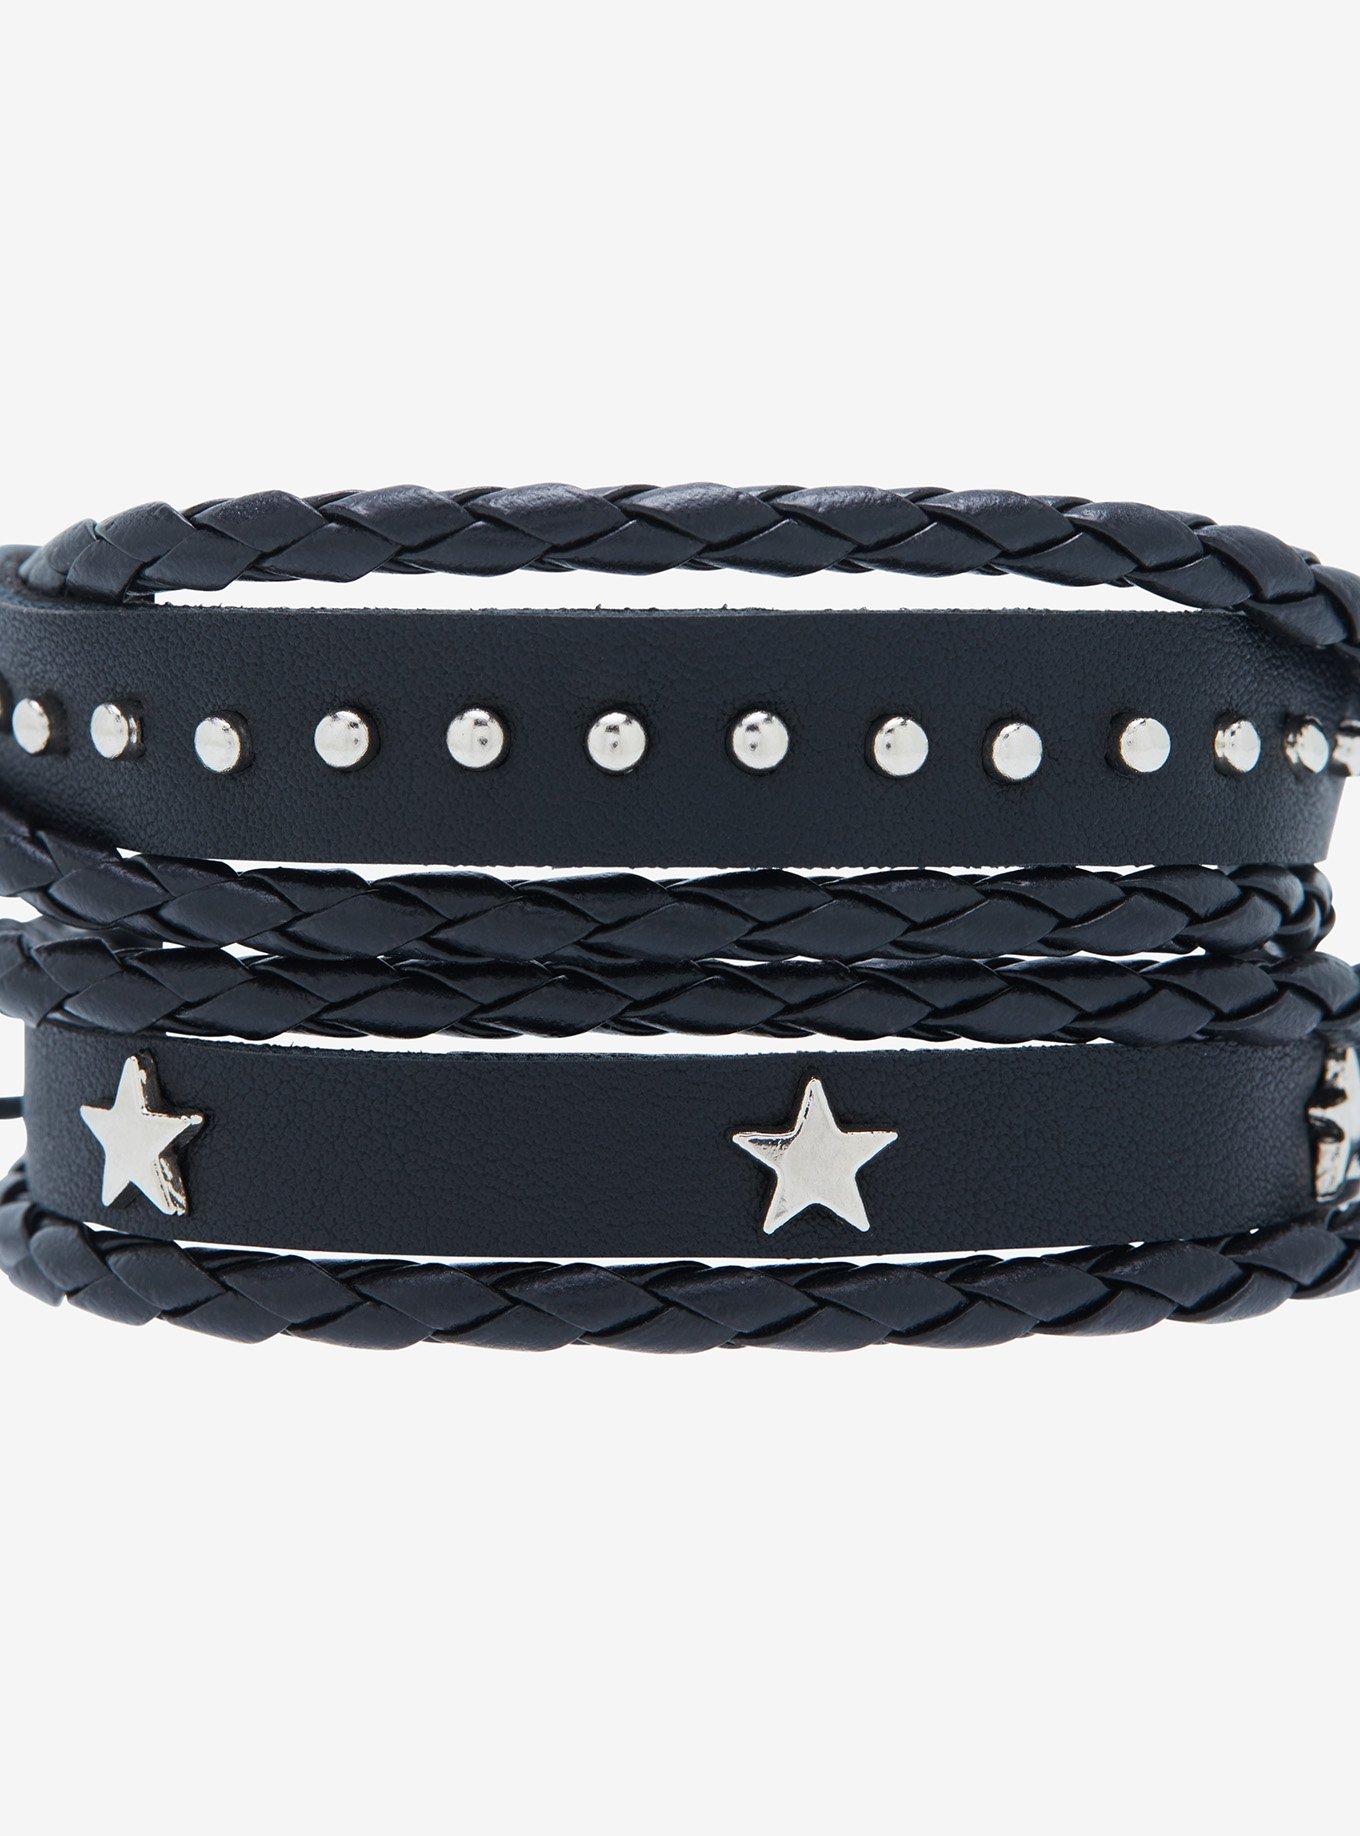 Star Stud Faux Leather Layered Cord Bracelet Set